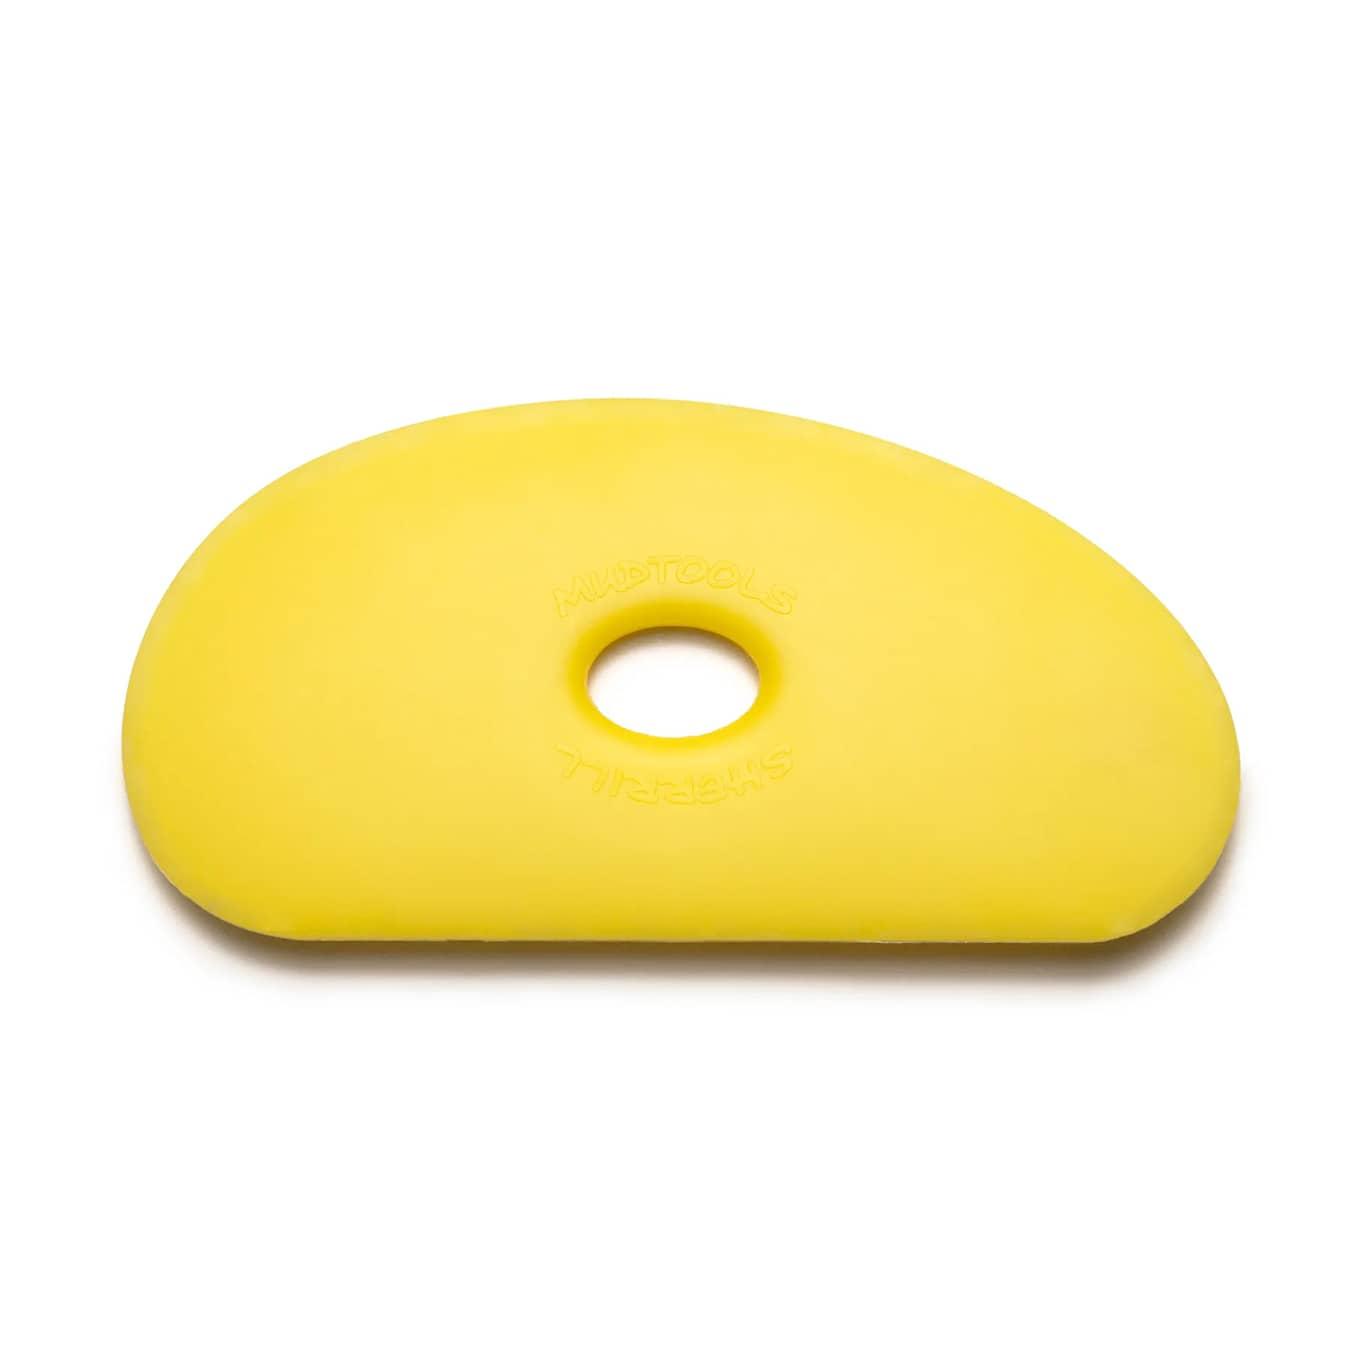 Mudtools Shape 5 Kidney – Yellow (Soft)